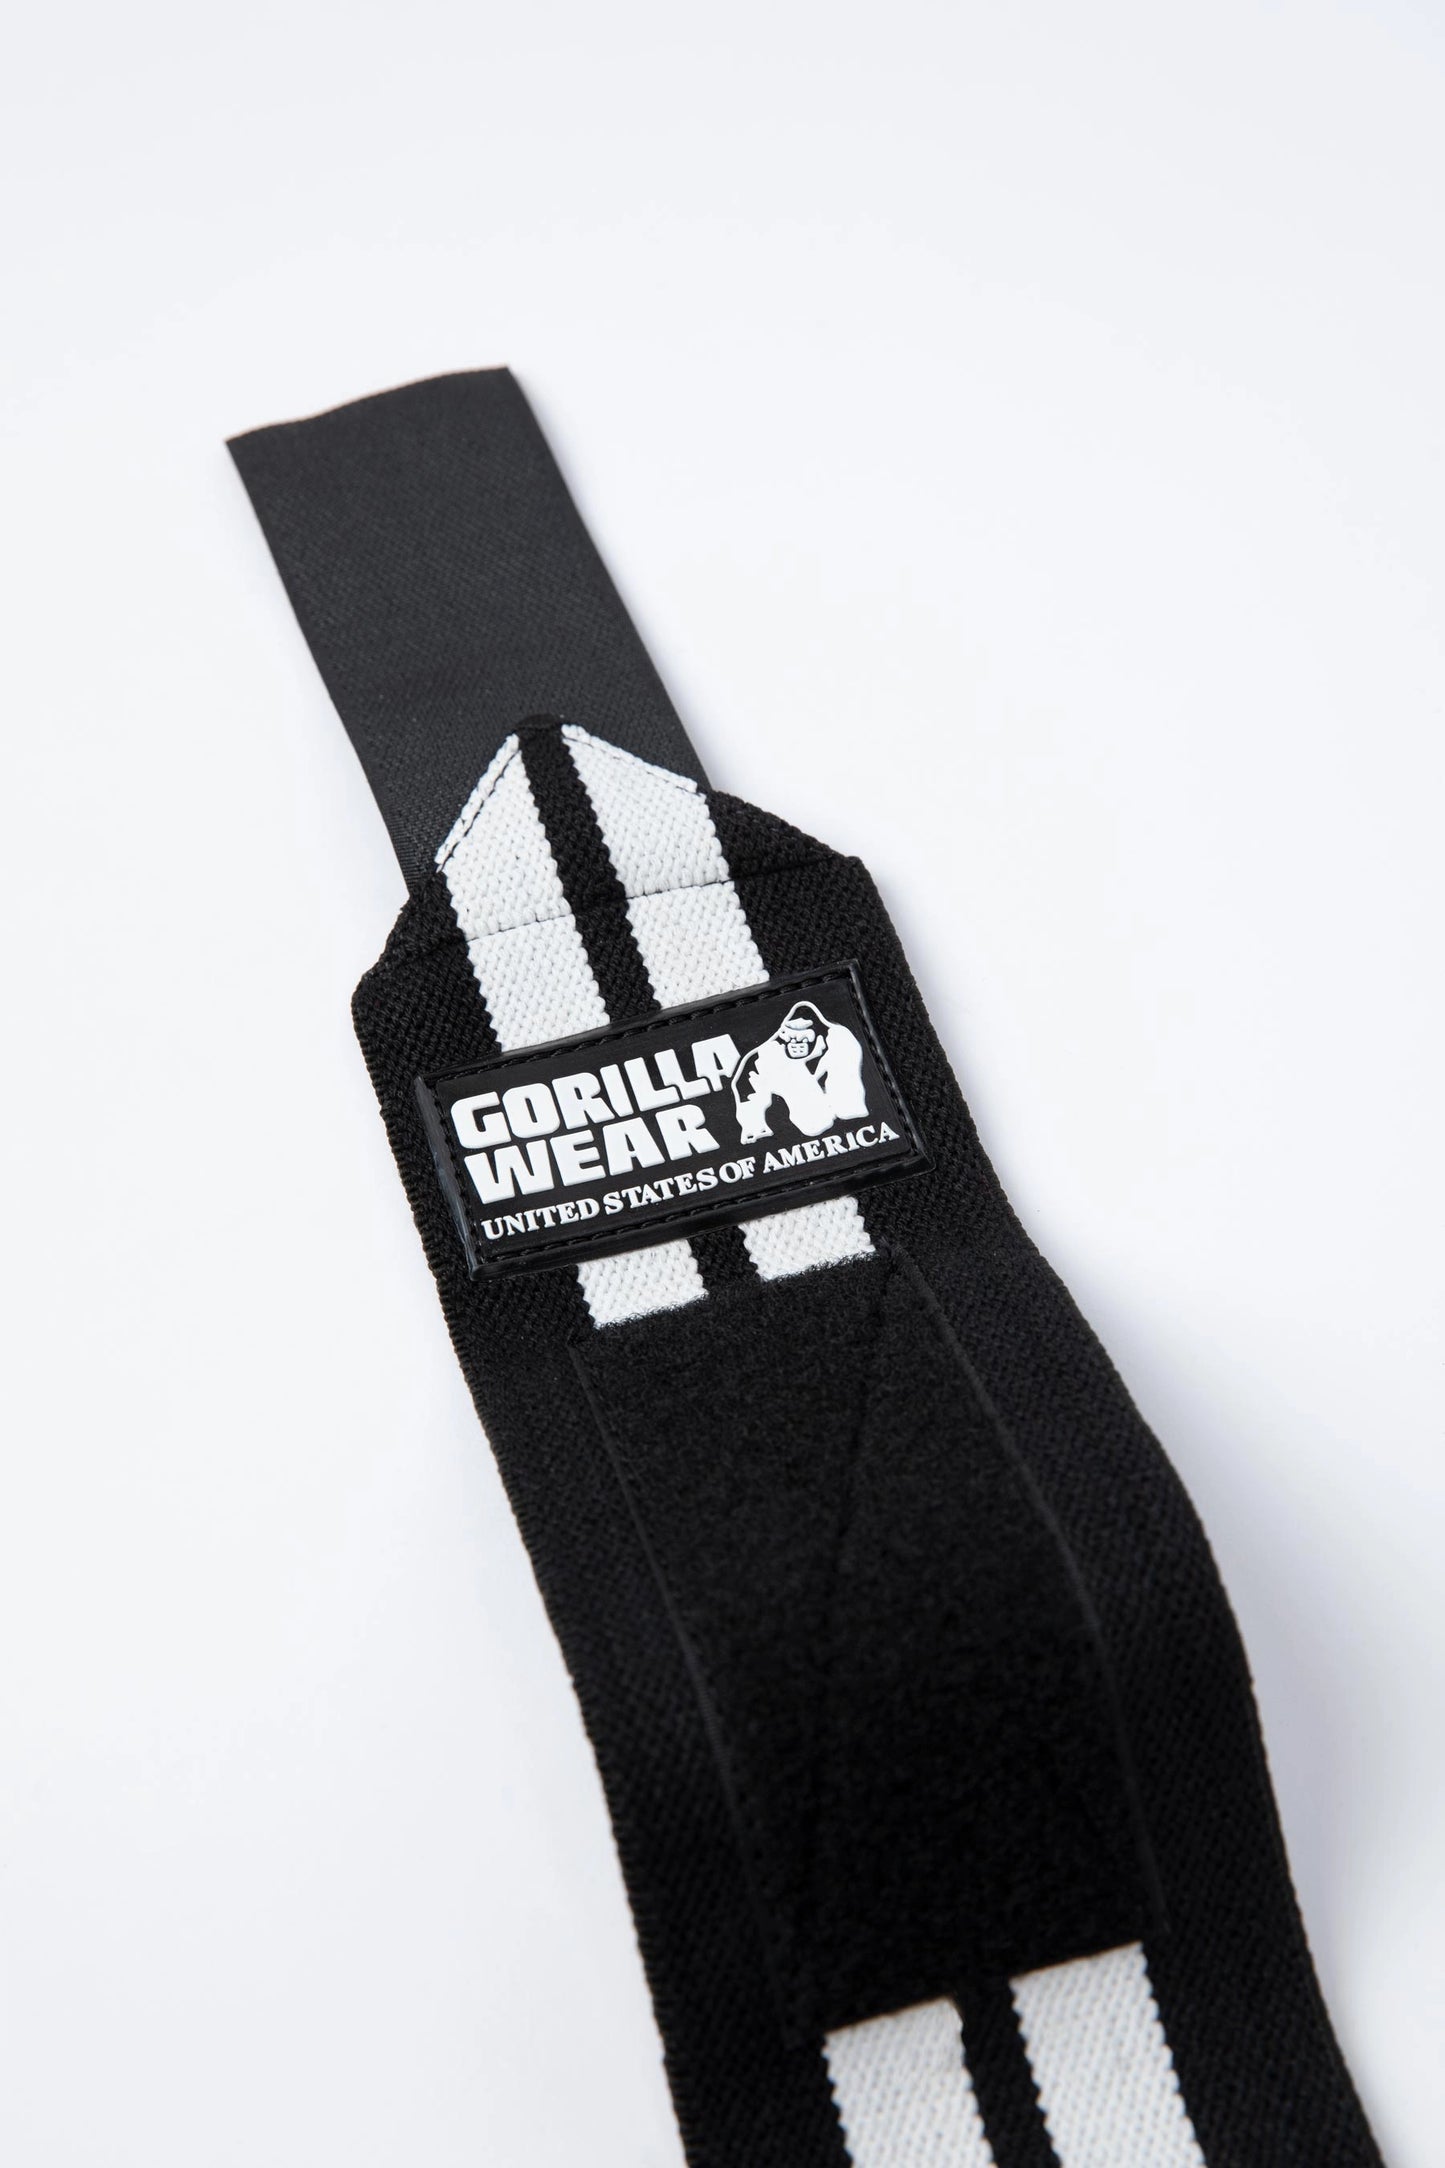 Gorilla Wear Wrist Wraps Pro - Schwarz/Weiss